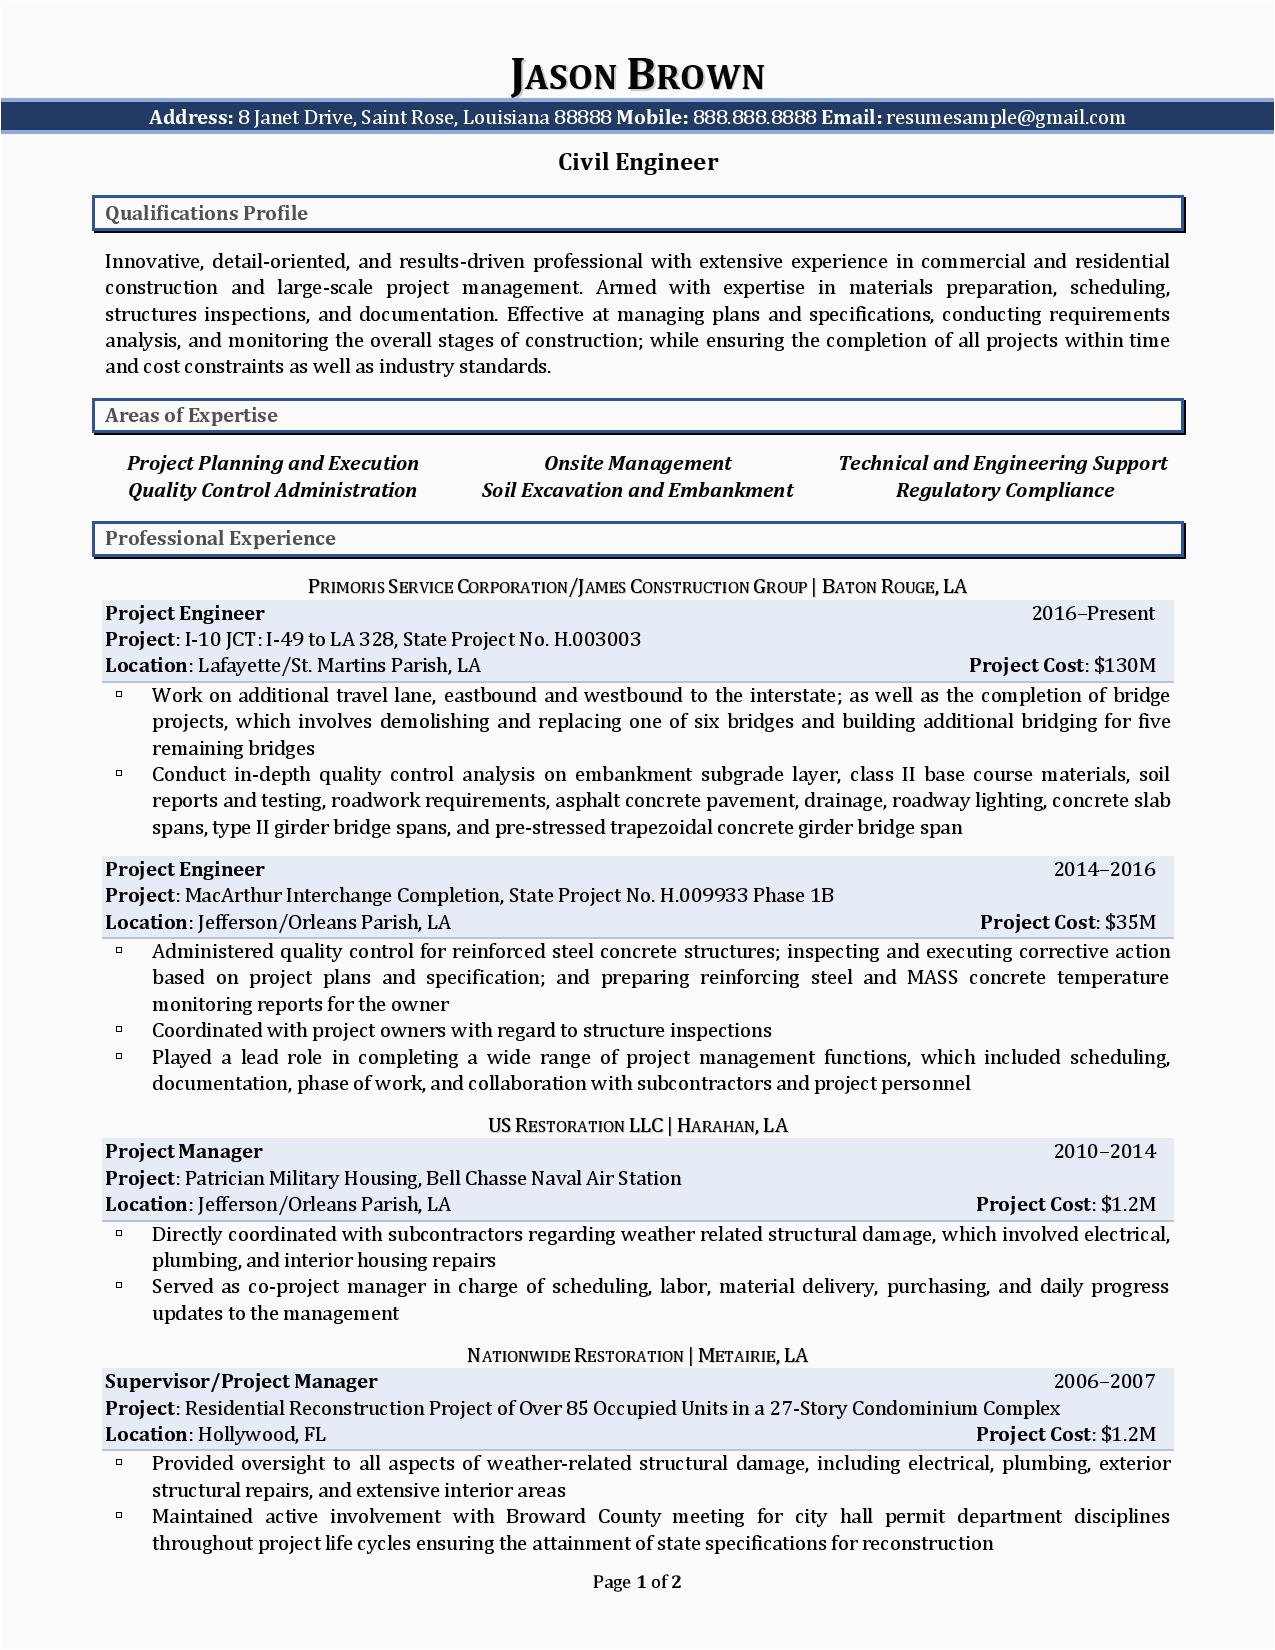 Sample Resume for Professional Civil Engineer Civil Engineer Resume Example